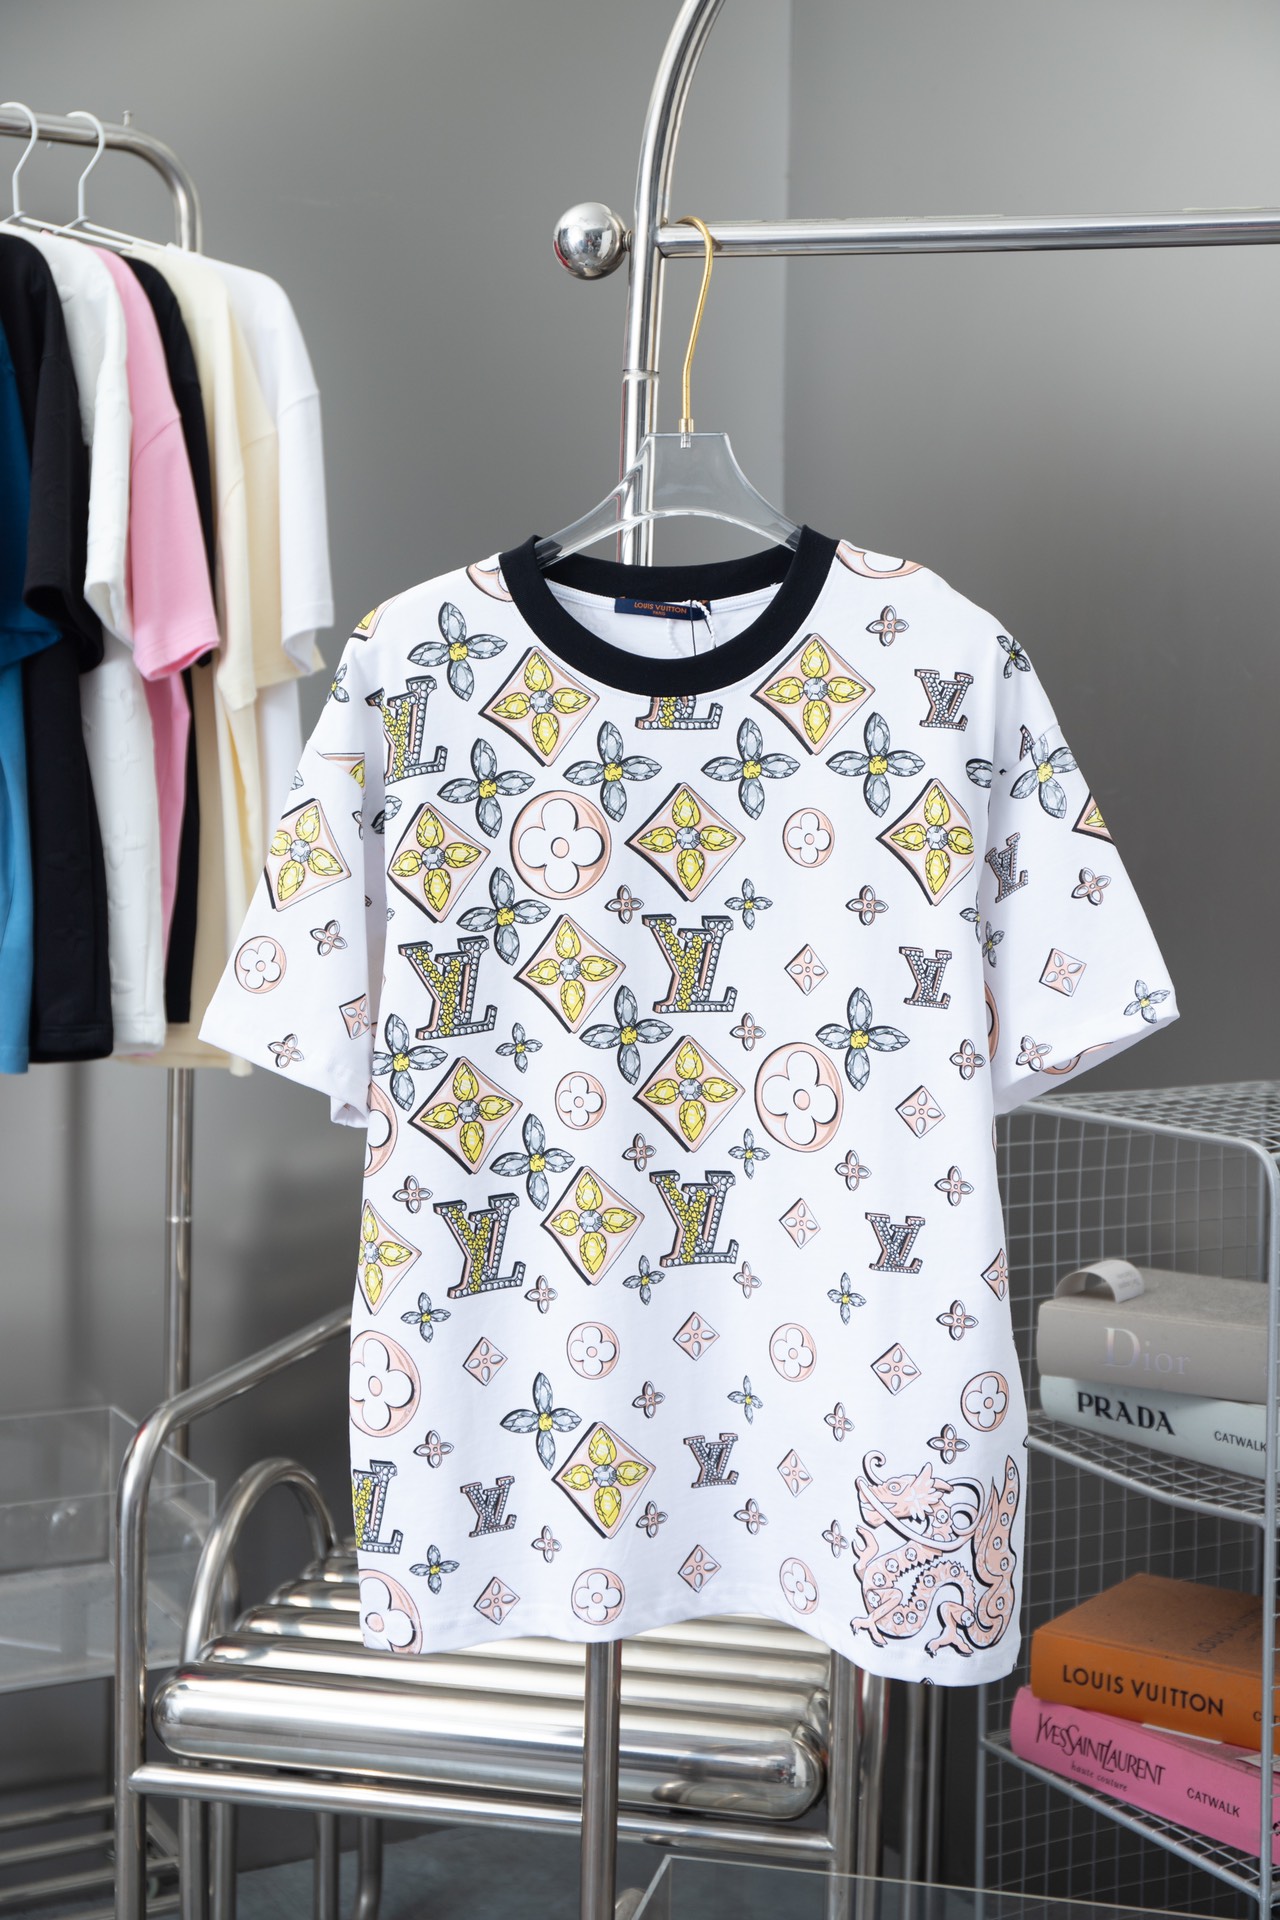 Louis Vuitton Clothing T-Shirt Printing Unisex Cotton Fashion Short Sleeve